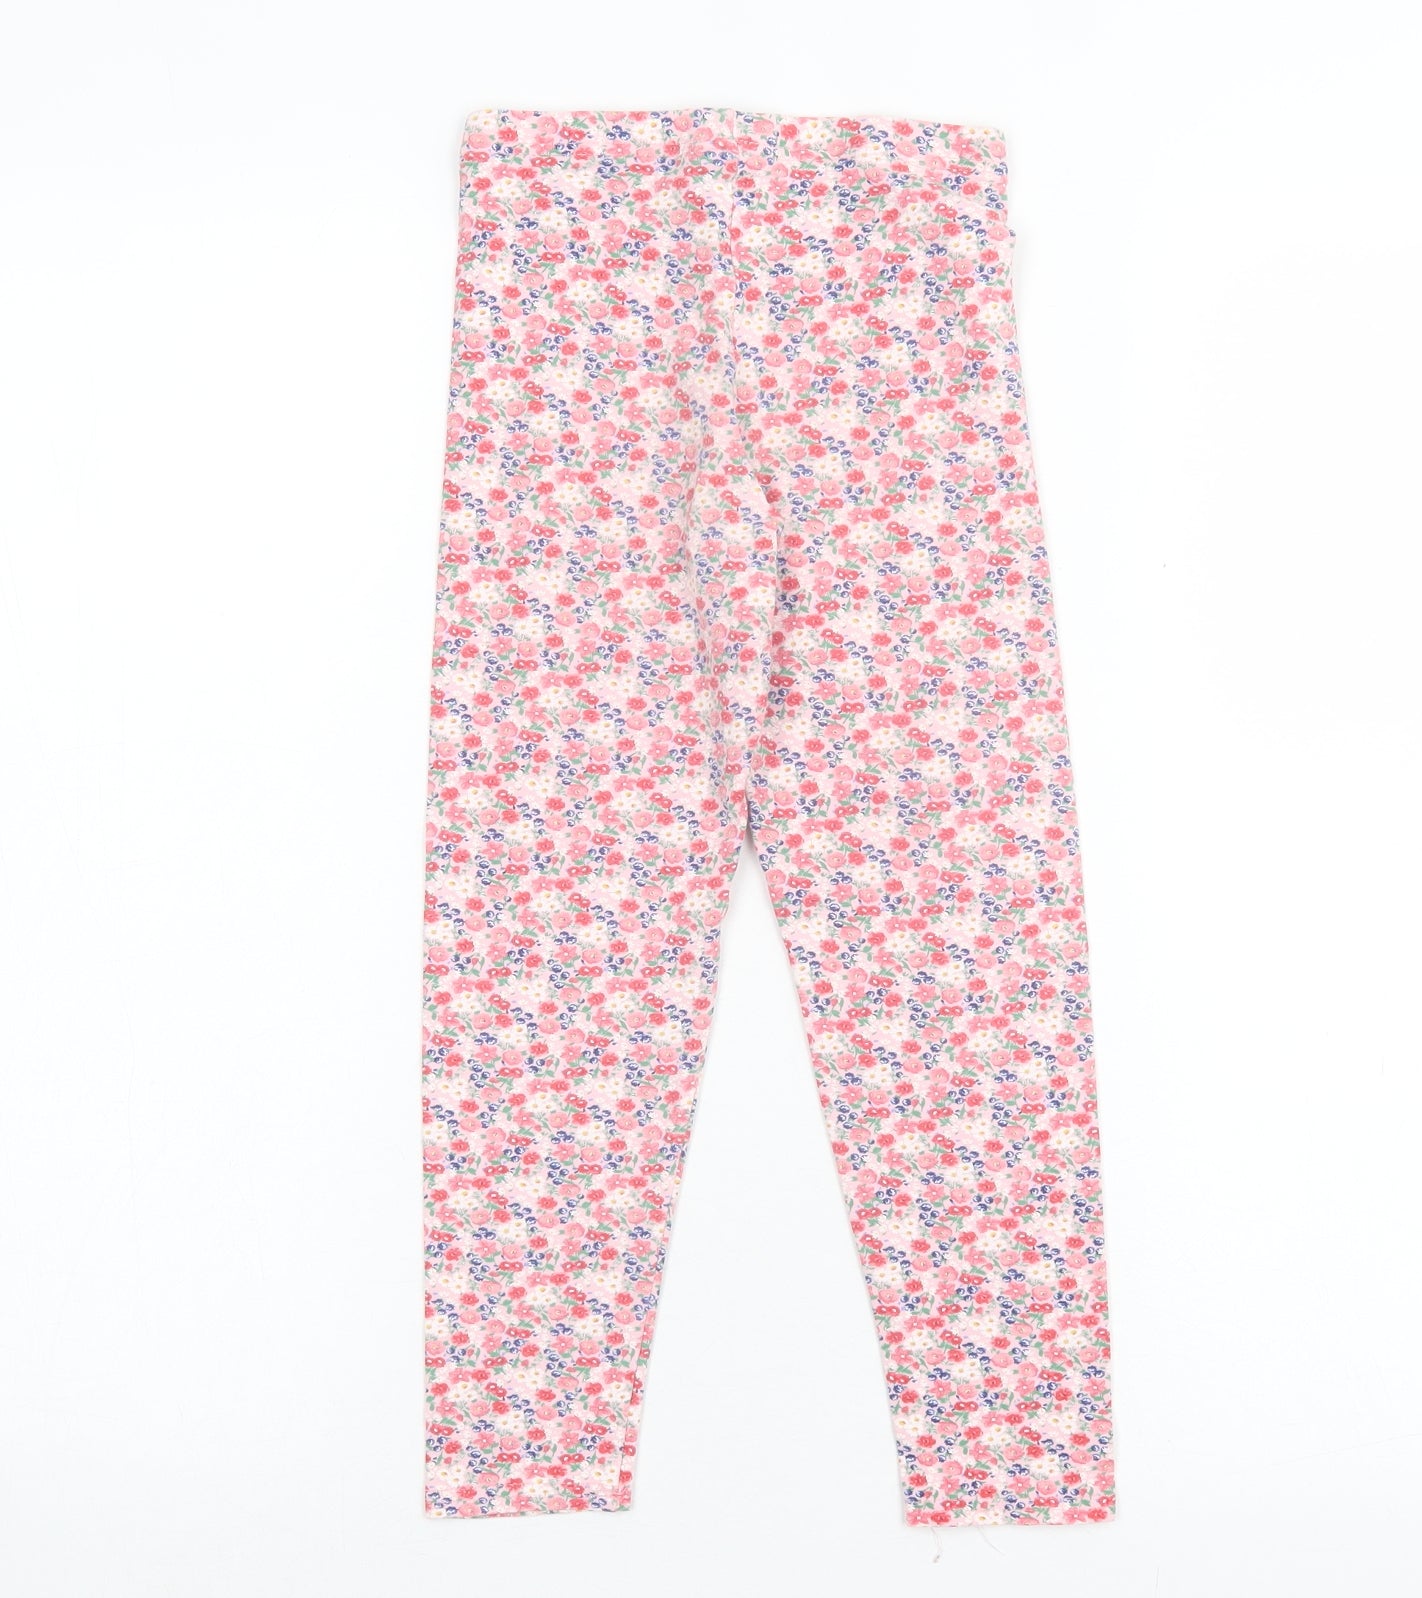 Matalan Girls Pink Floral Cotton Capri Trousers Size 9 Years Regular Pullover